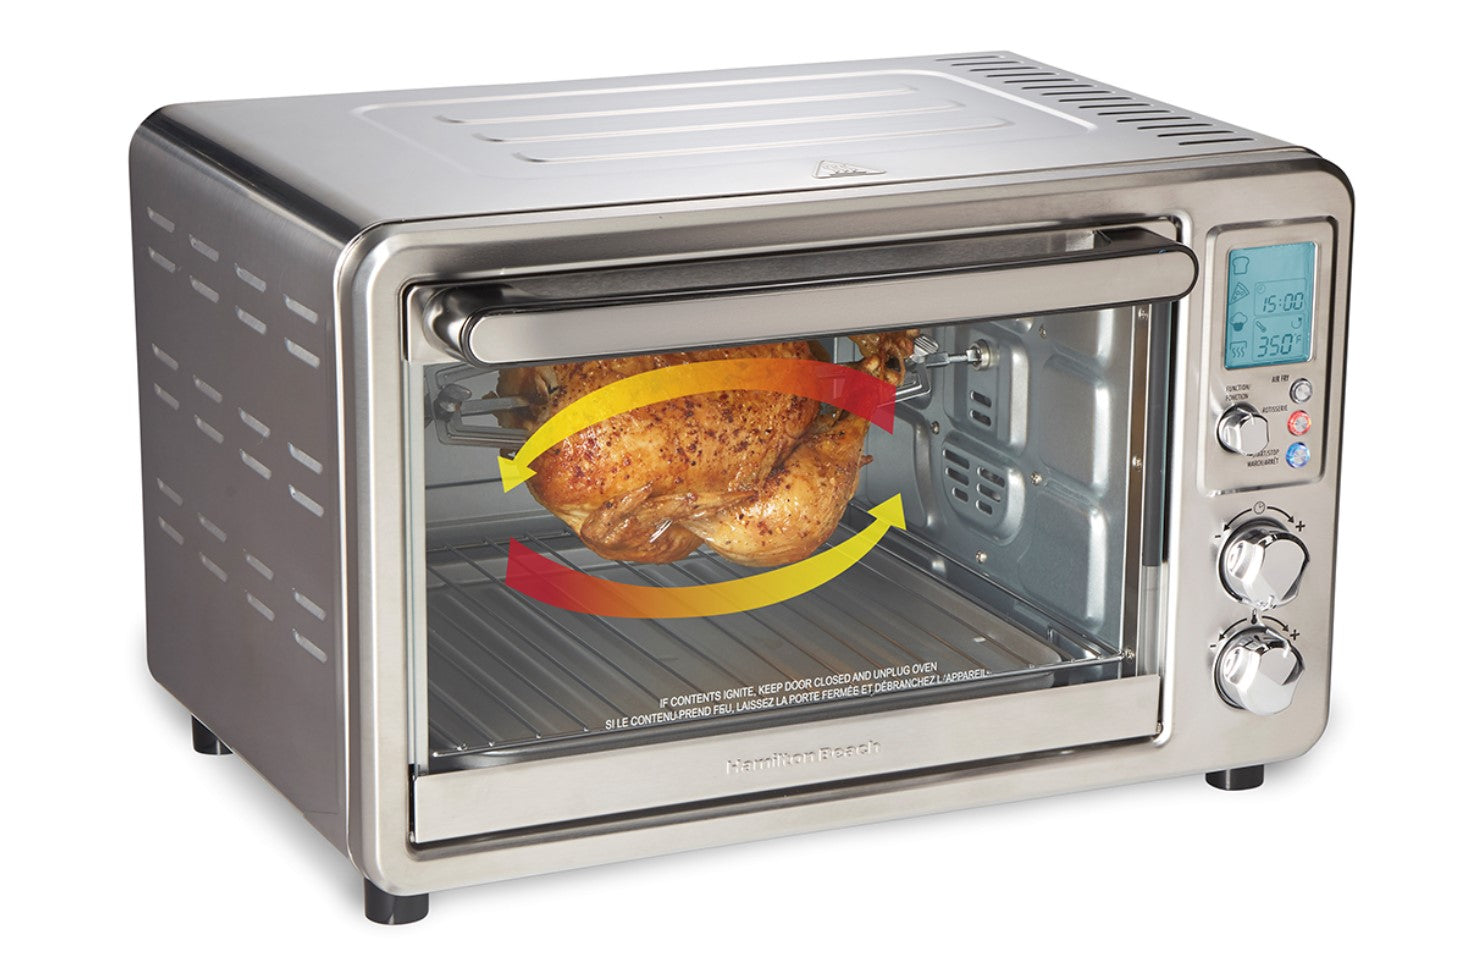 Hamilton Beach R31193 Sure-Crisp Digital Air Fryer Toaster Oven with Rotisserie - Certified Refurbished